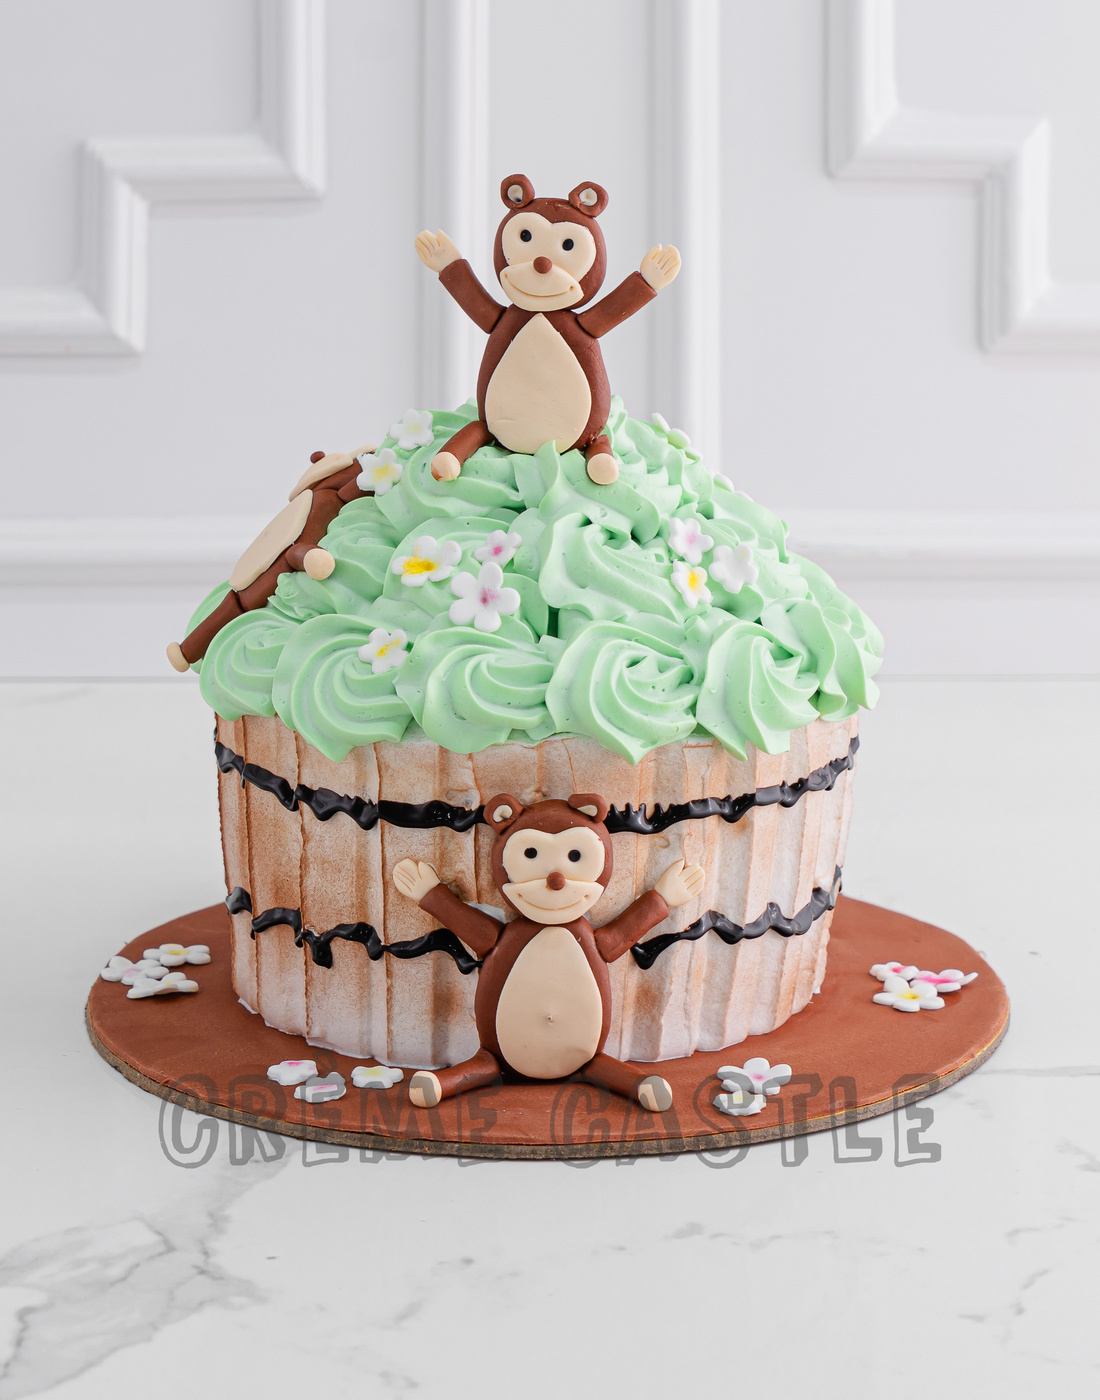 Minion Theme Cake | Custom Birthday Cake | Fully Customizable Birthday Cake